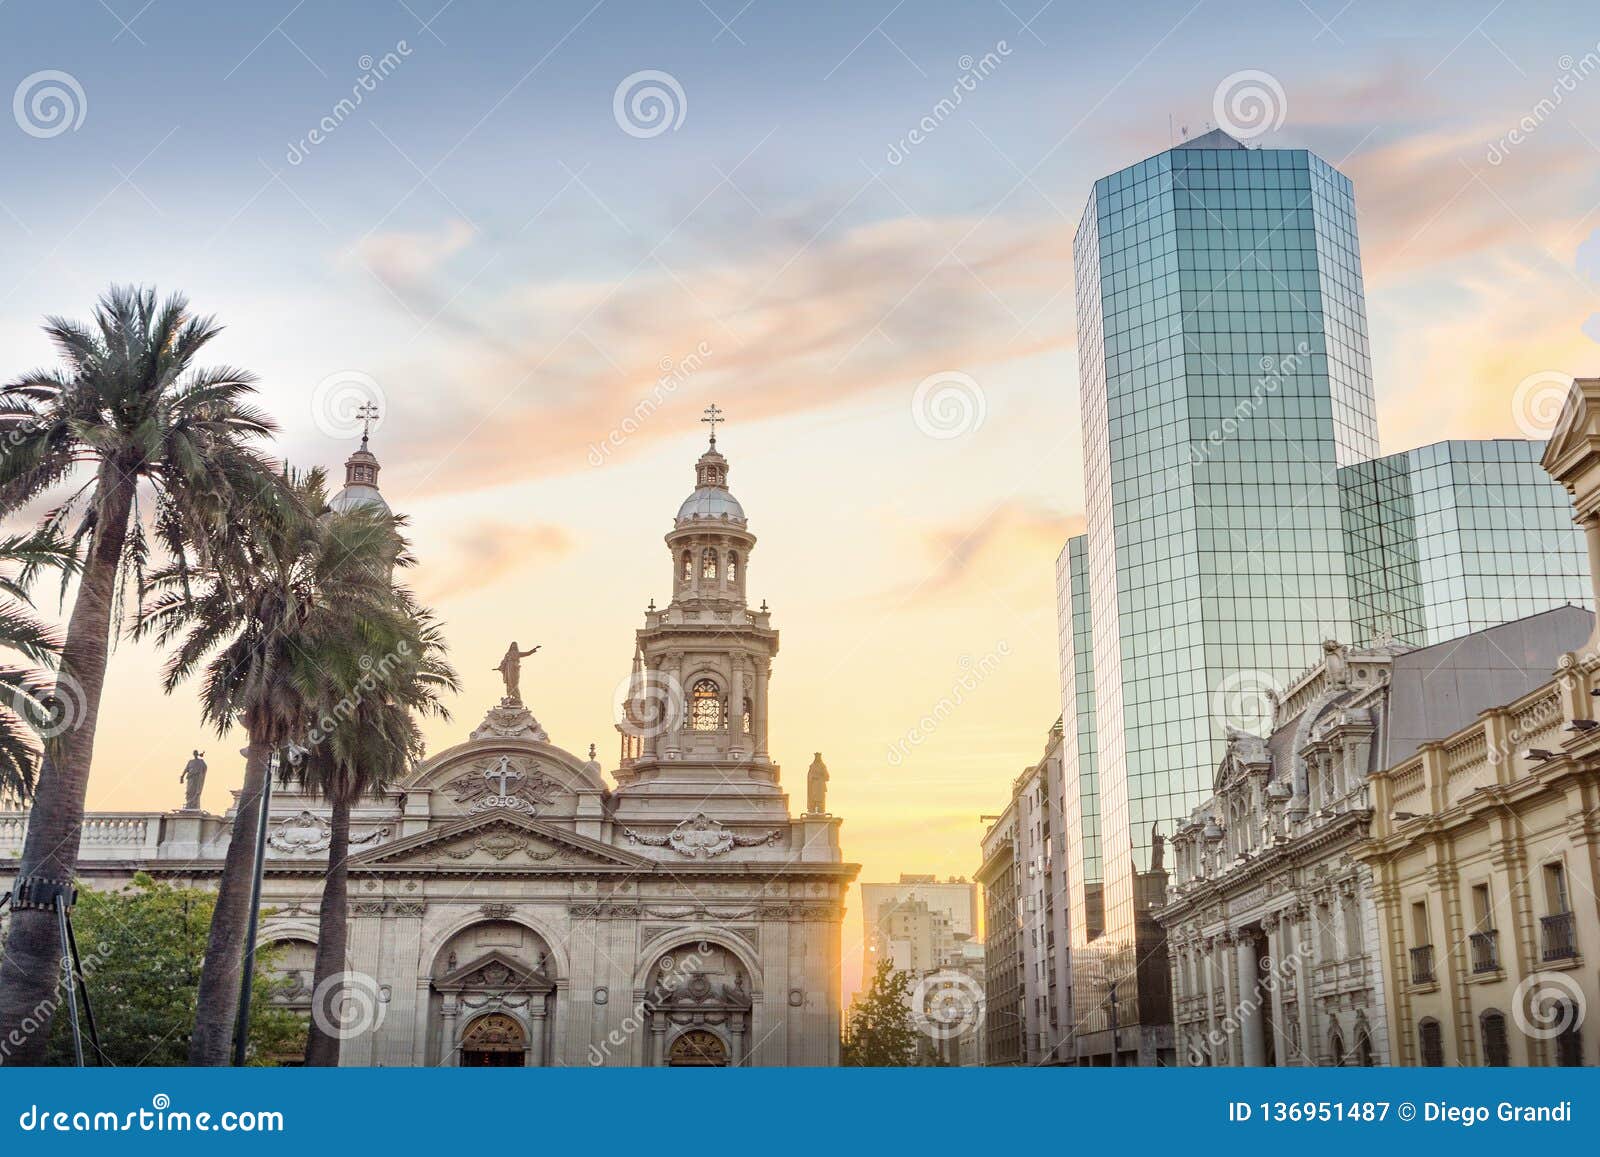 plaza de armas square and santiago metropolitan cathedral at sunset - santiago, chile